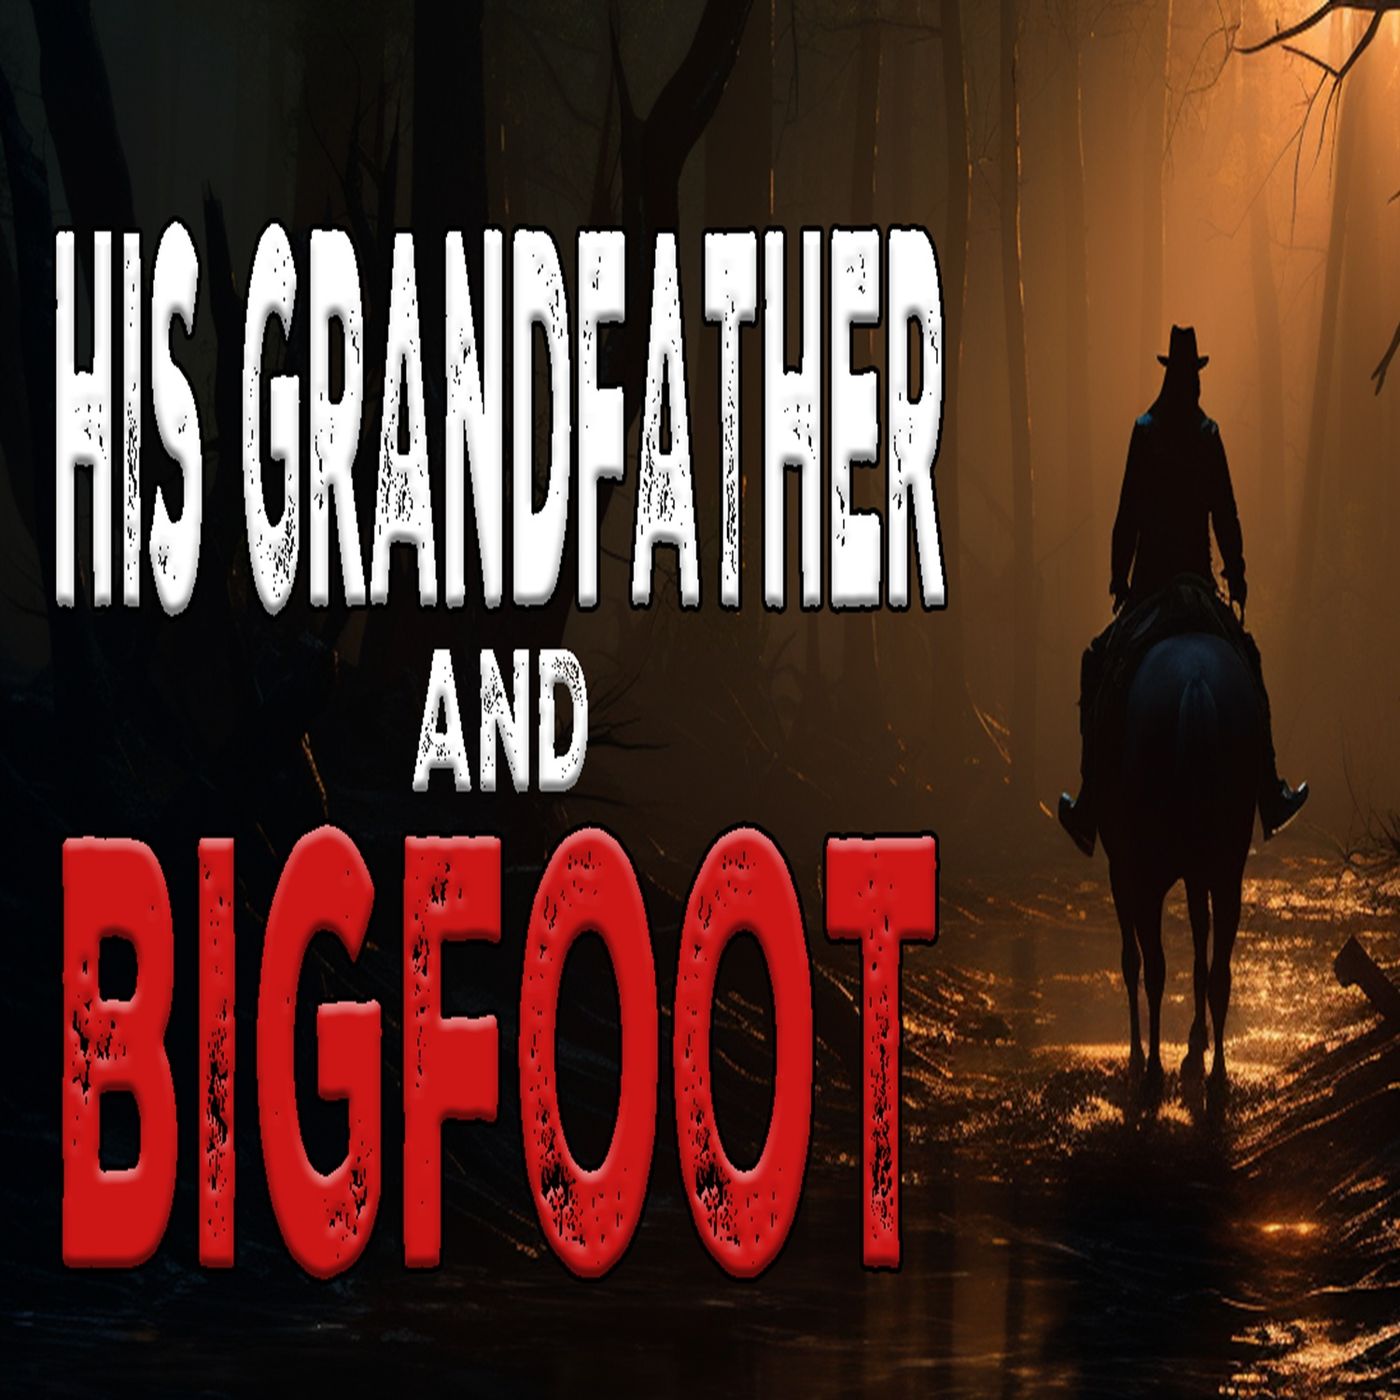 My Grandfathers Bigfoot